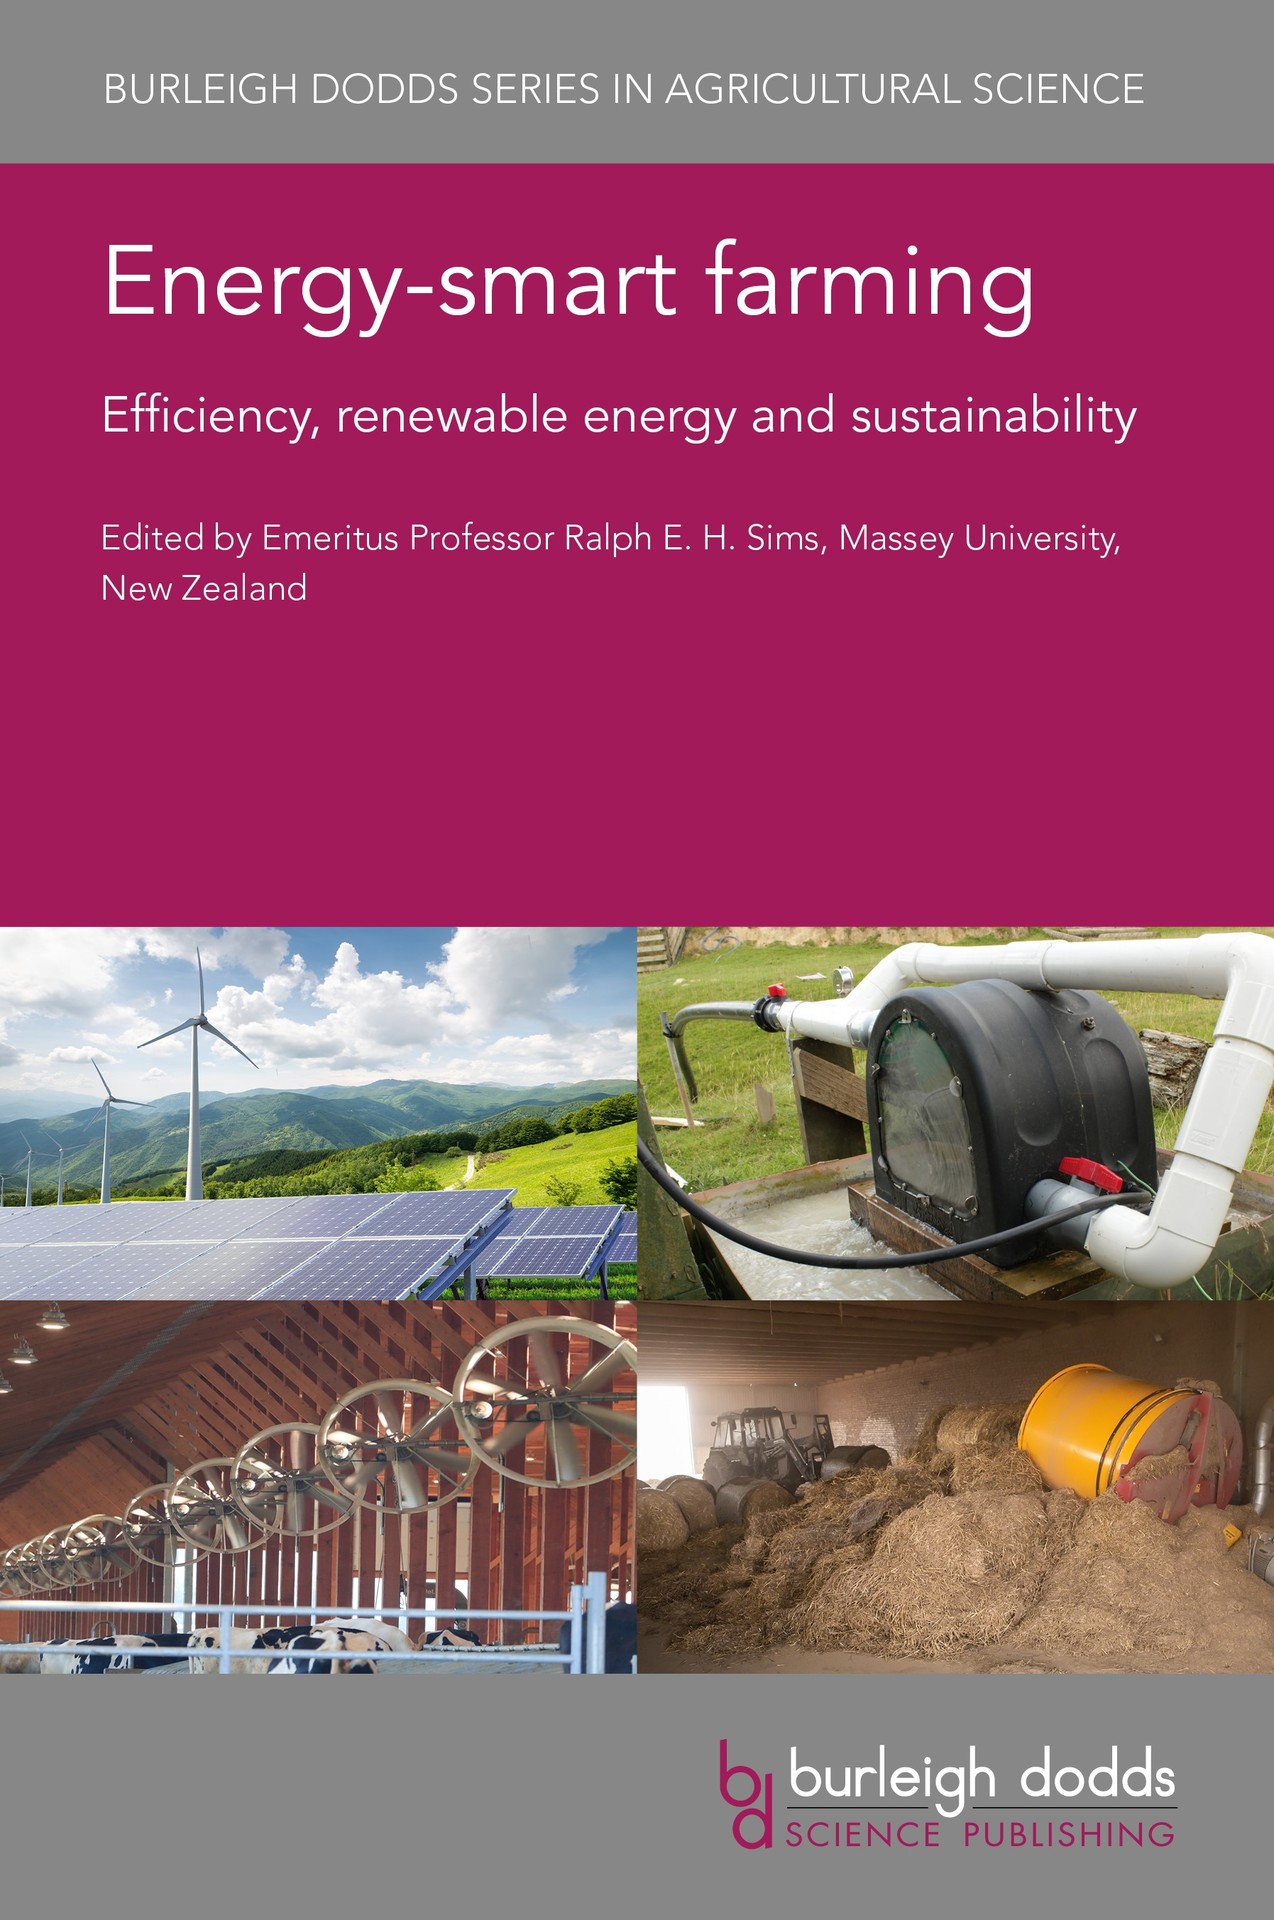 Energy-smart farming: Efficiency, renewable energy and sustainability